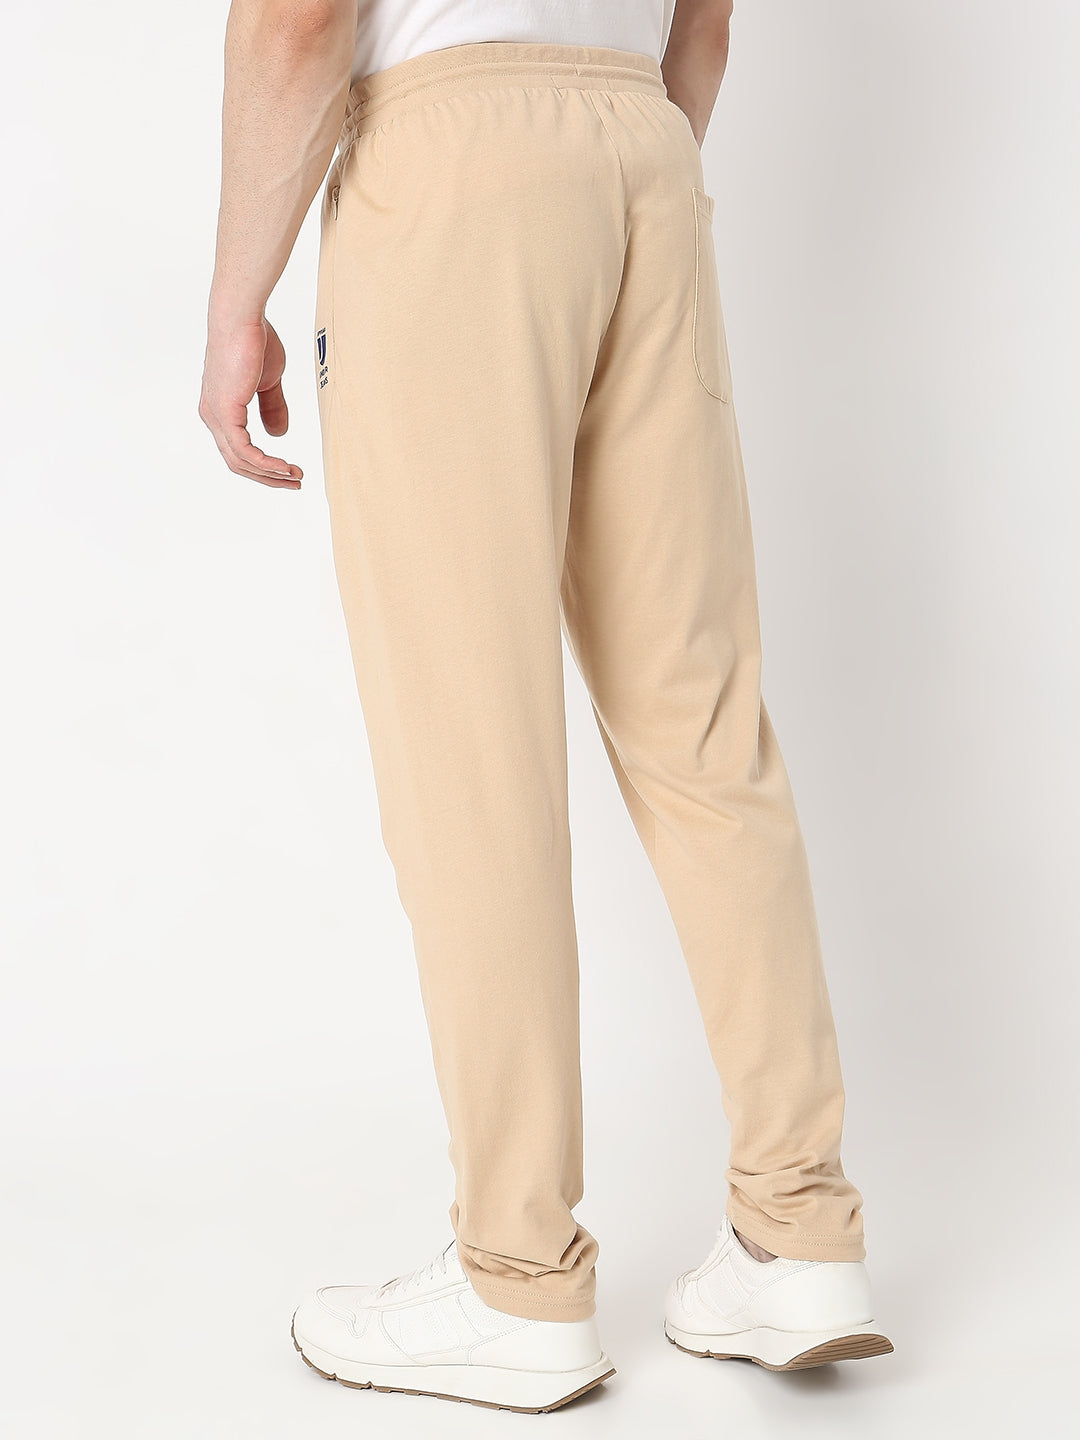 Underjeans by Spykar Men Premium Cotton Beige Pyjama